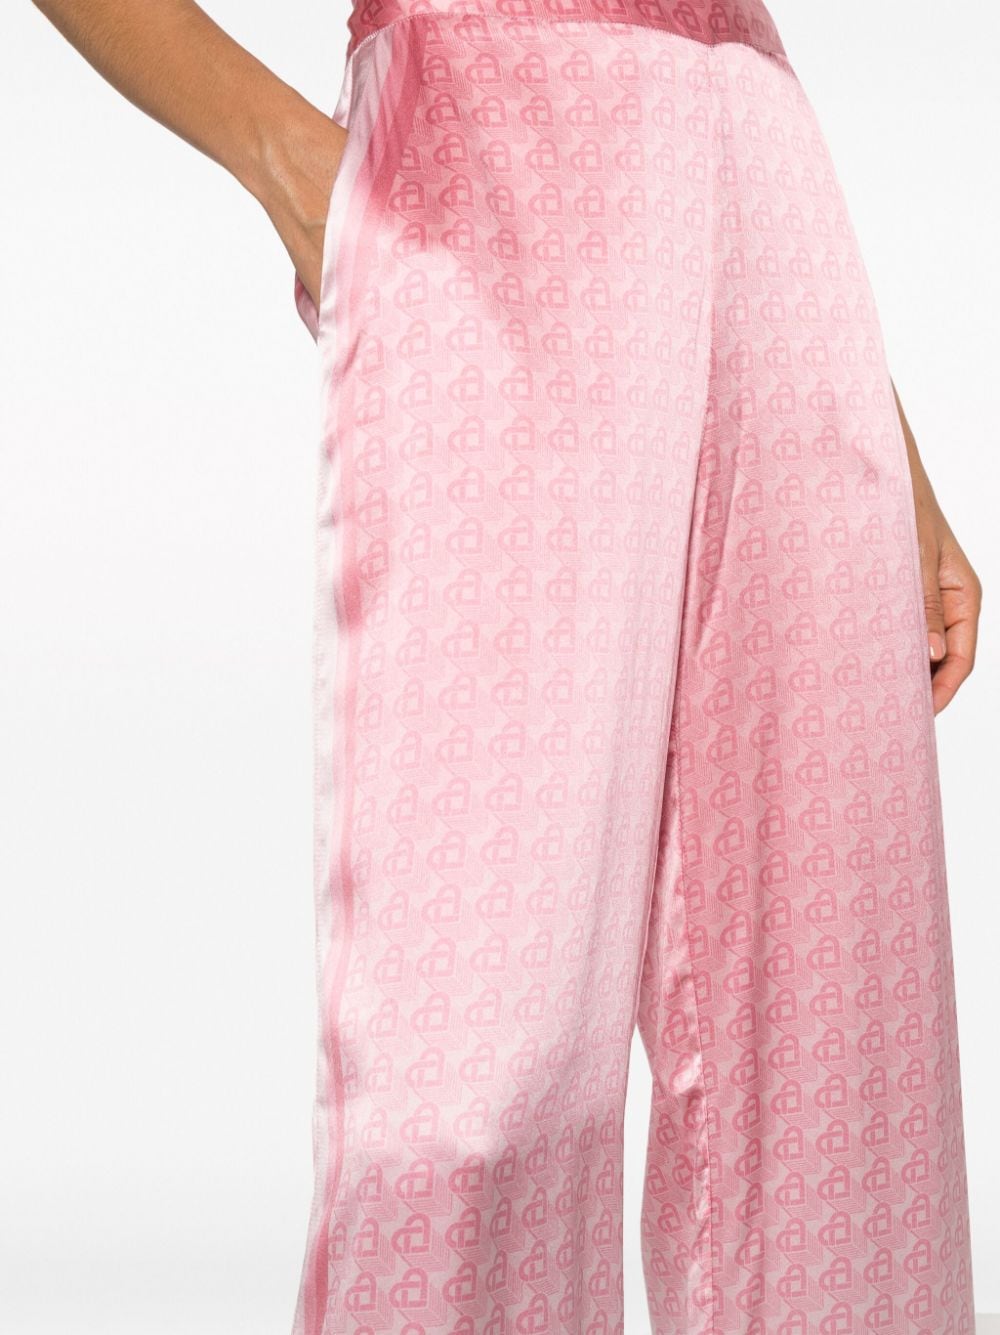 CASABLANCA Morning City View Silk Trousers - High Waist Wide Leg Monogram Print Pants for Women